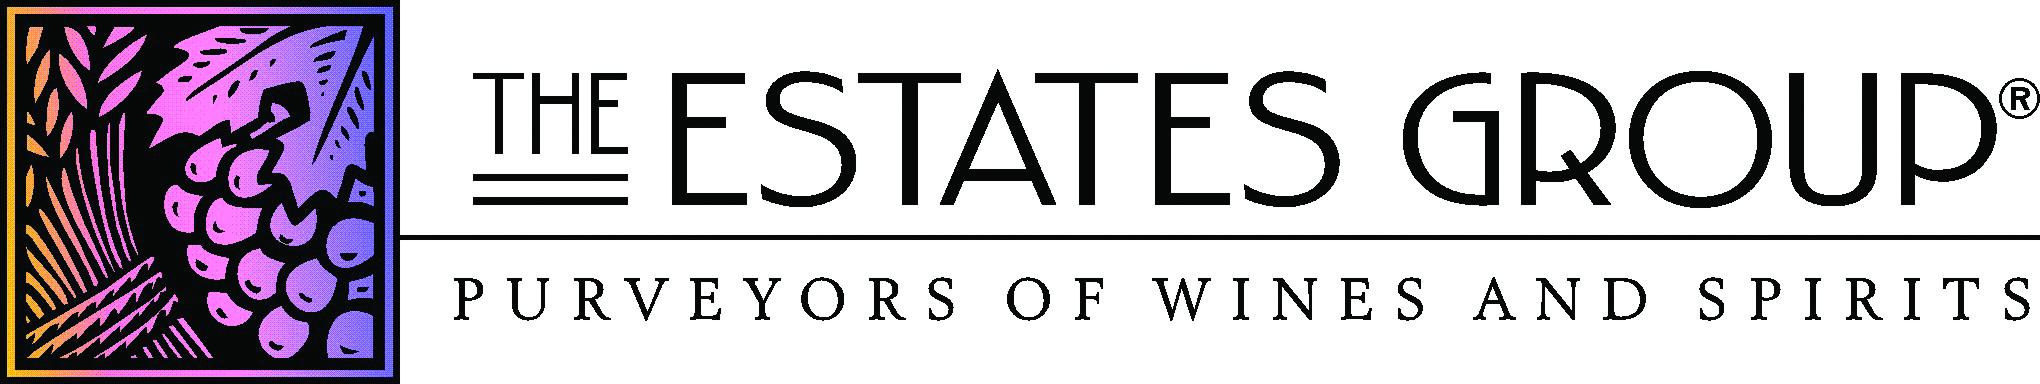 The Estates Group Logo.jpg